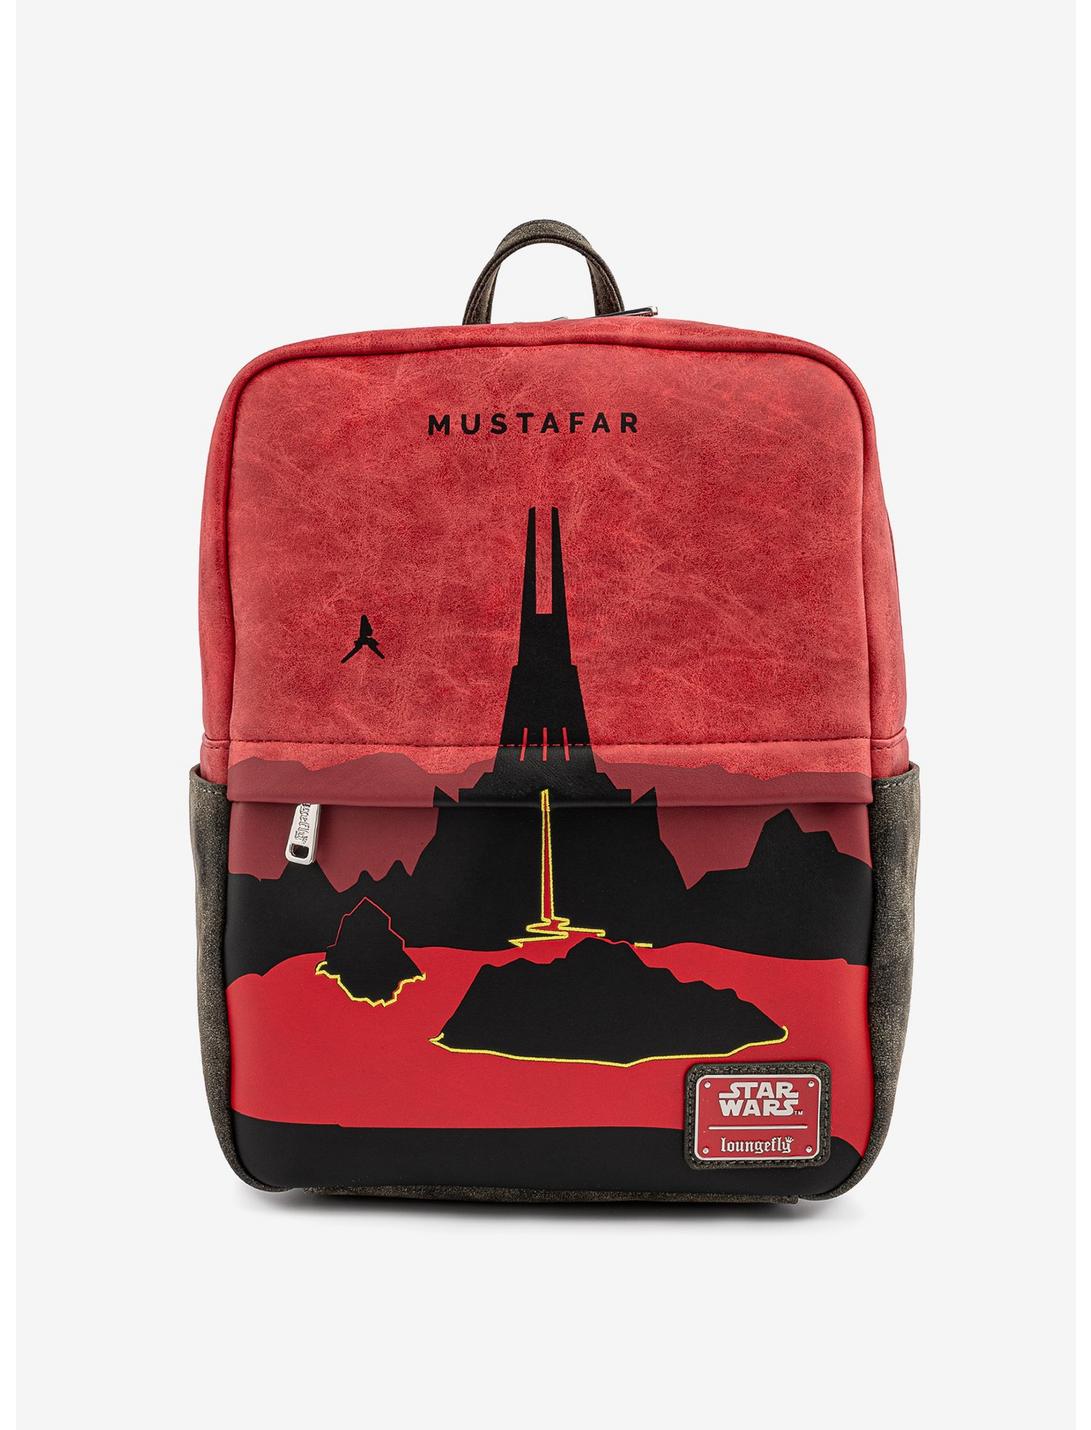 Loungefly Star Wars Mustafar Mini Backpack, , hi-res